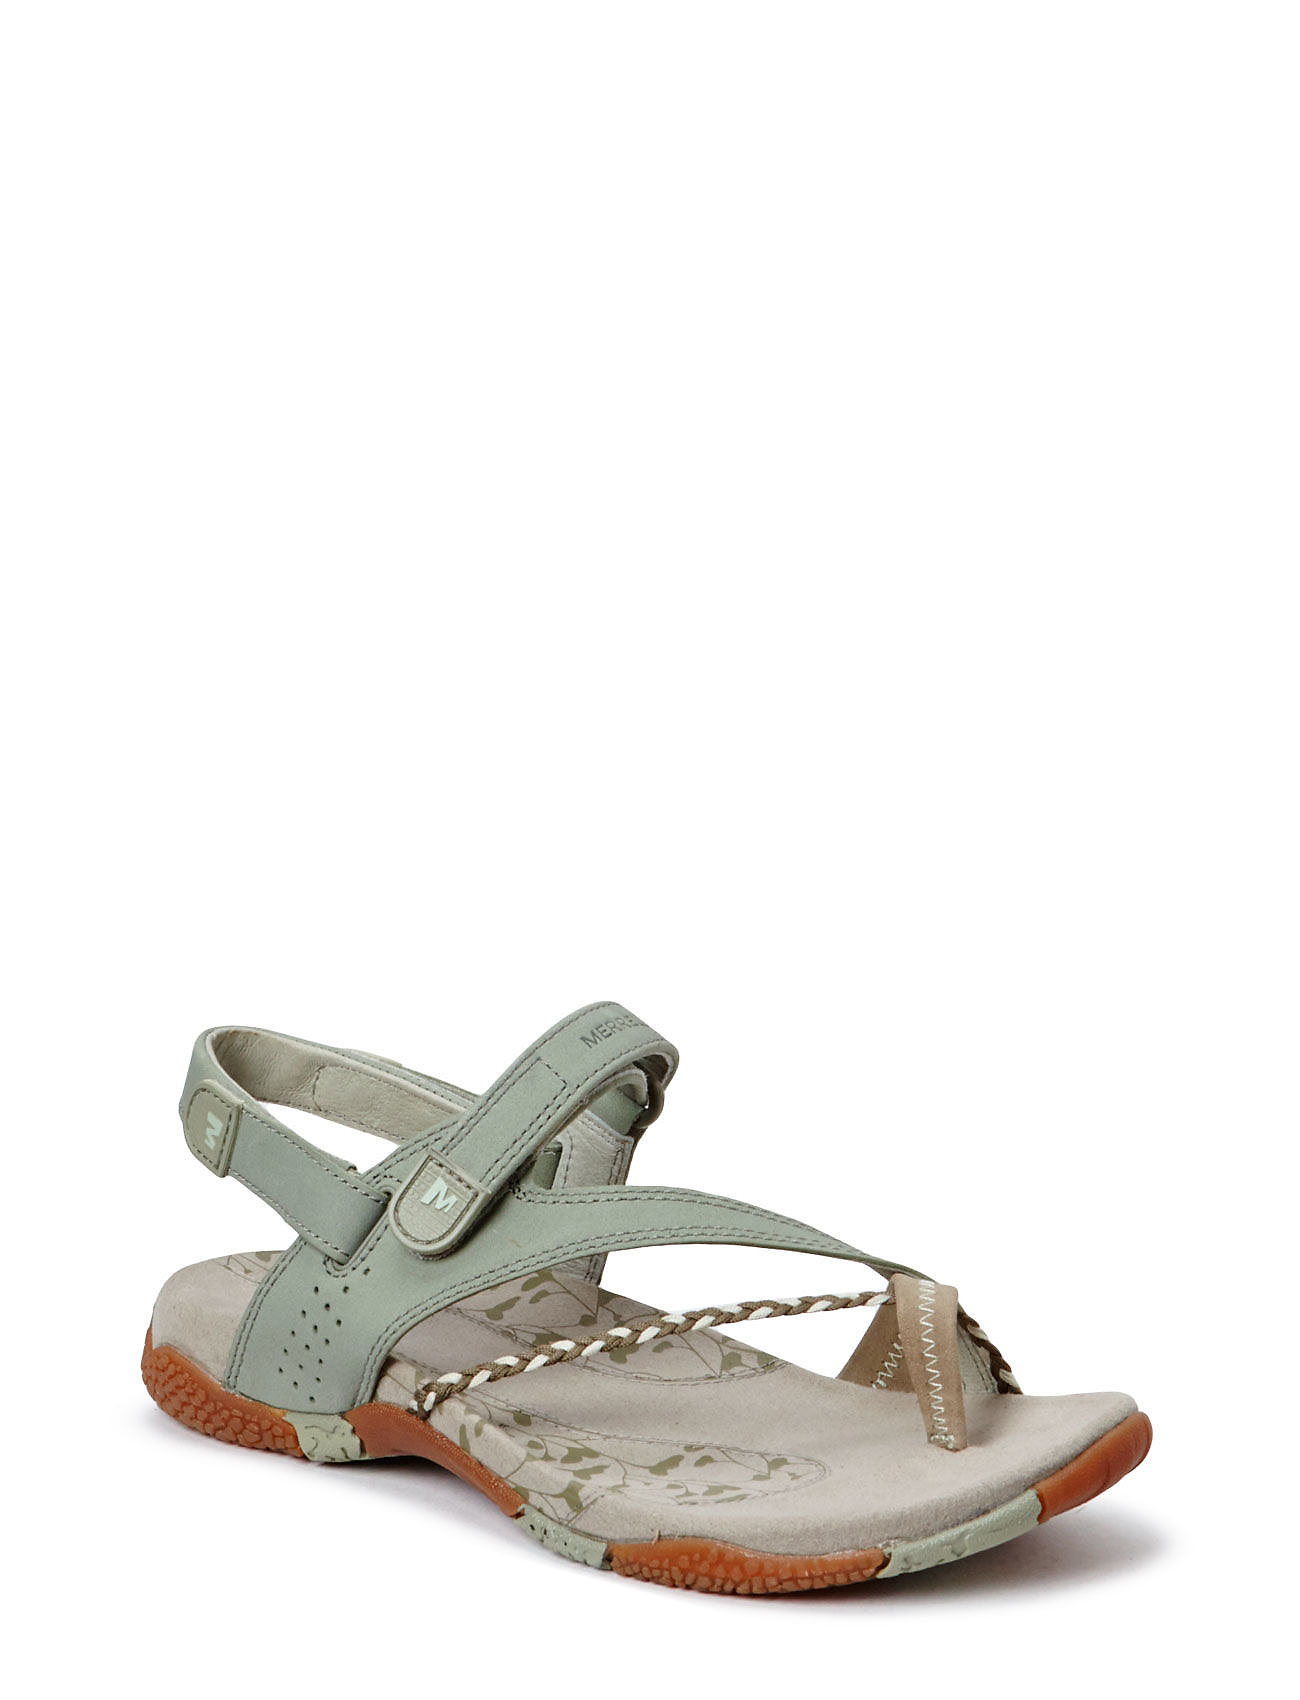 sollys blad Forfalske Merrell Women's Siena Seagrass - Flat sandals | Boozt.com